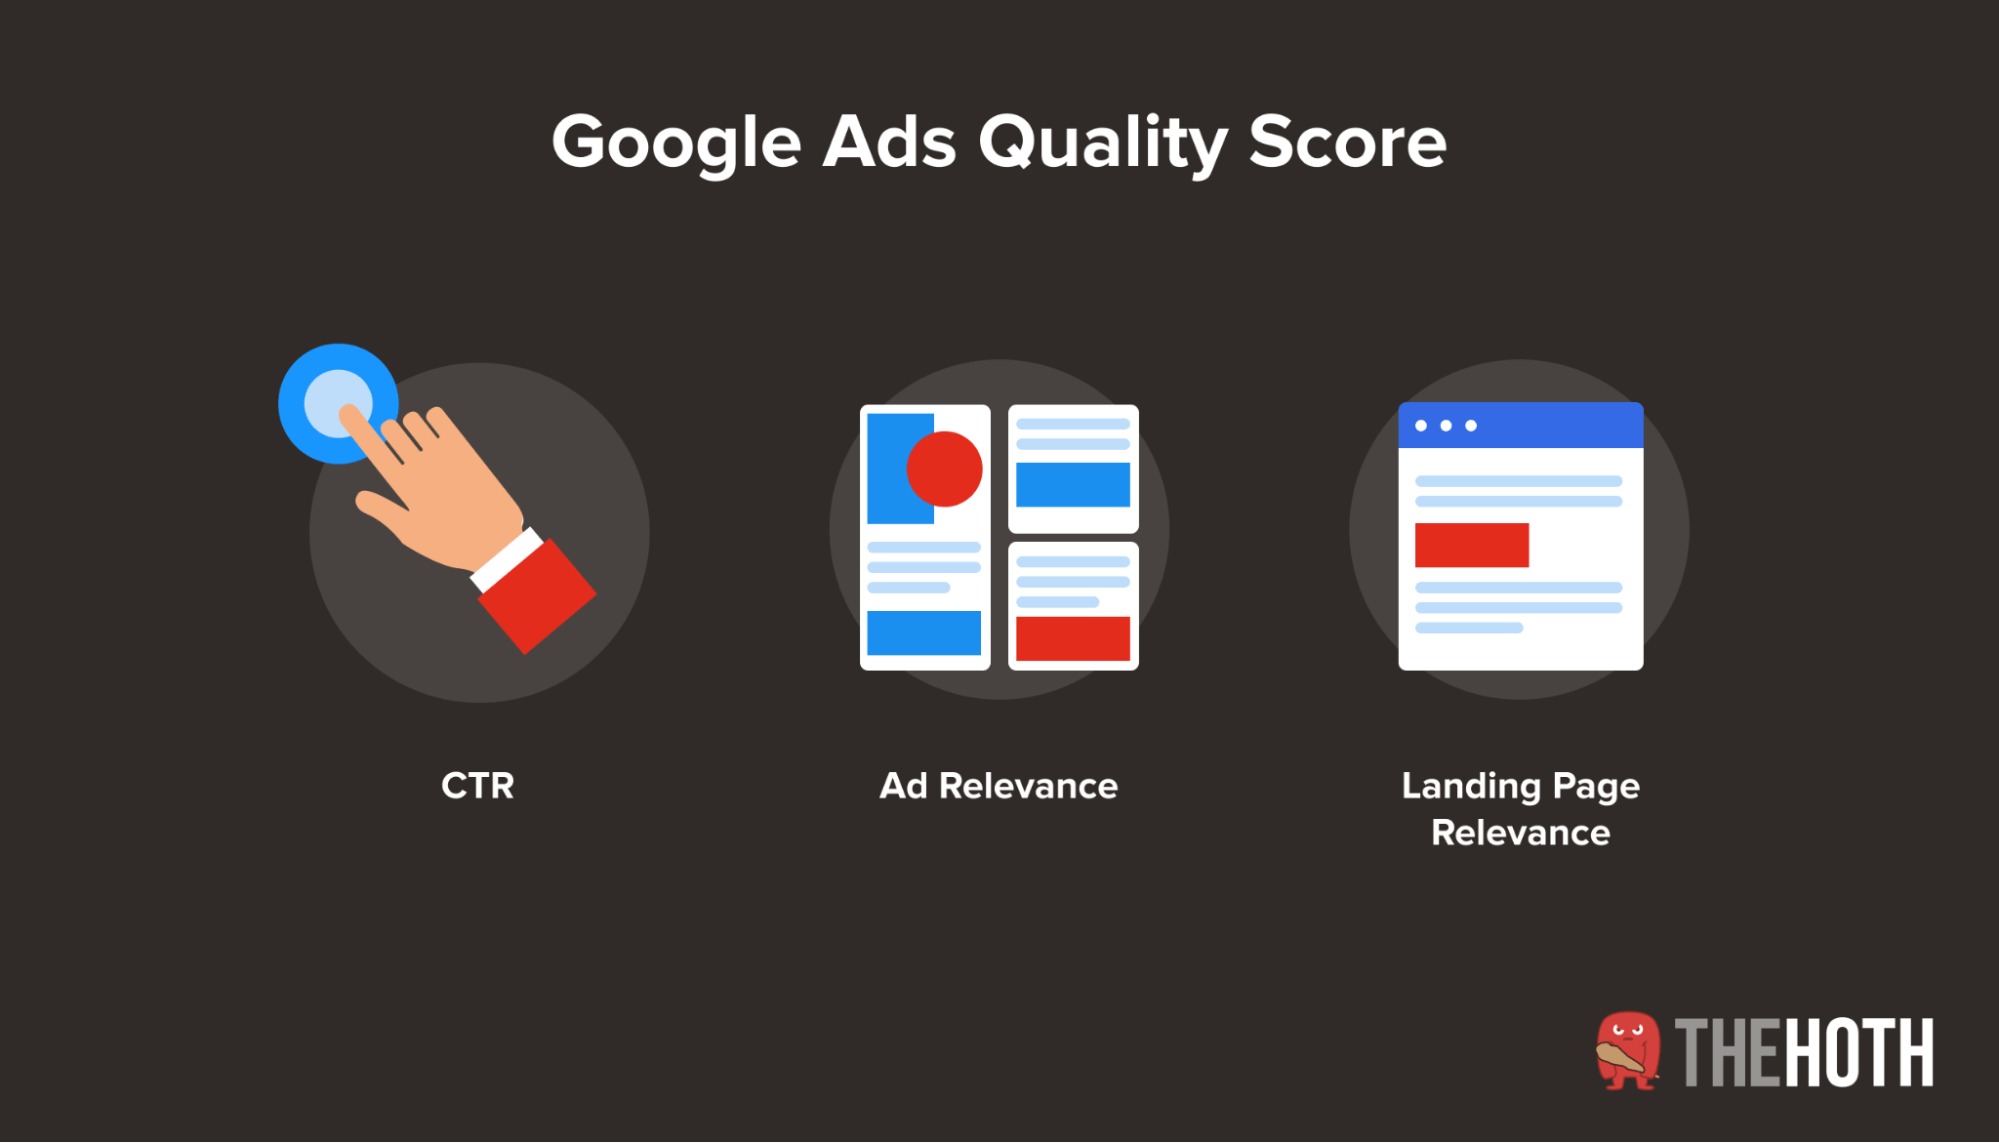 Factors that make up Google’s Quality Score